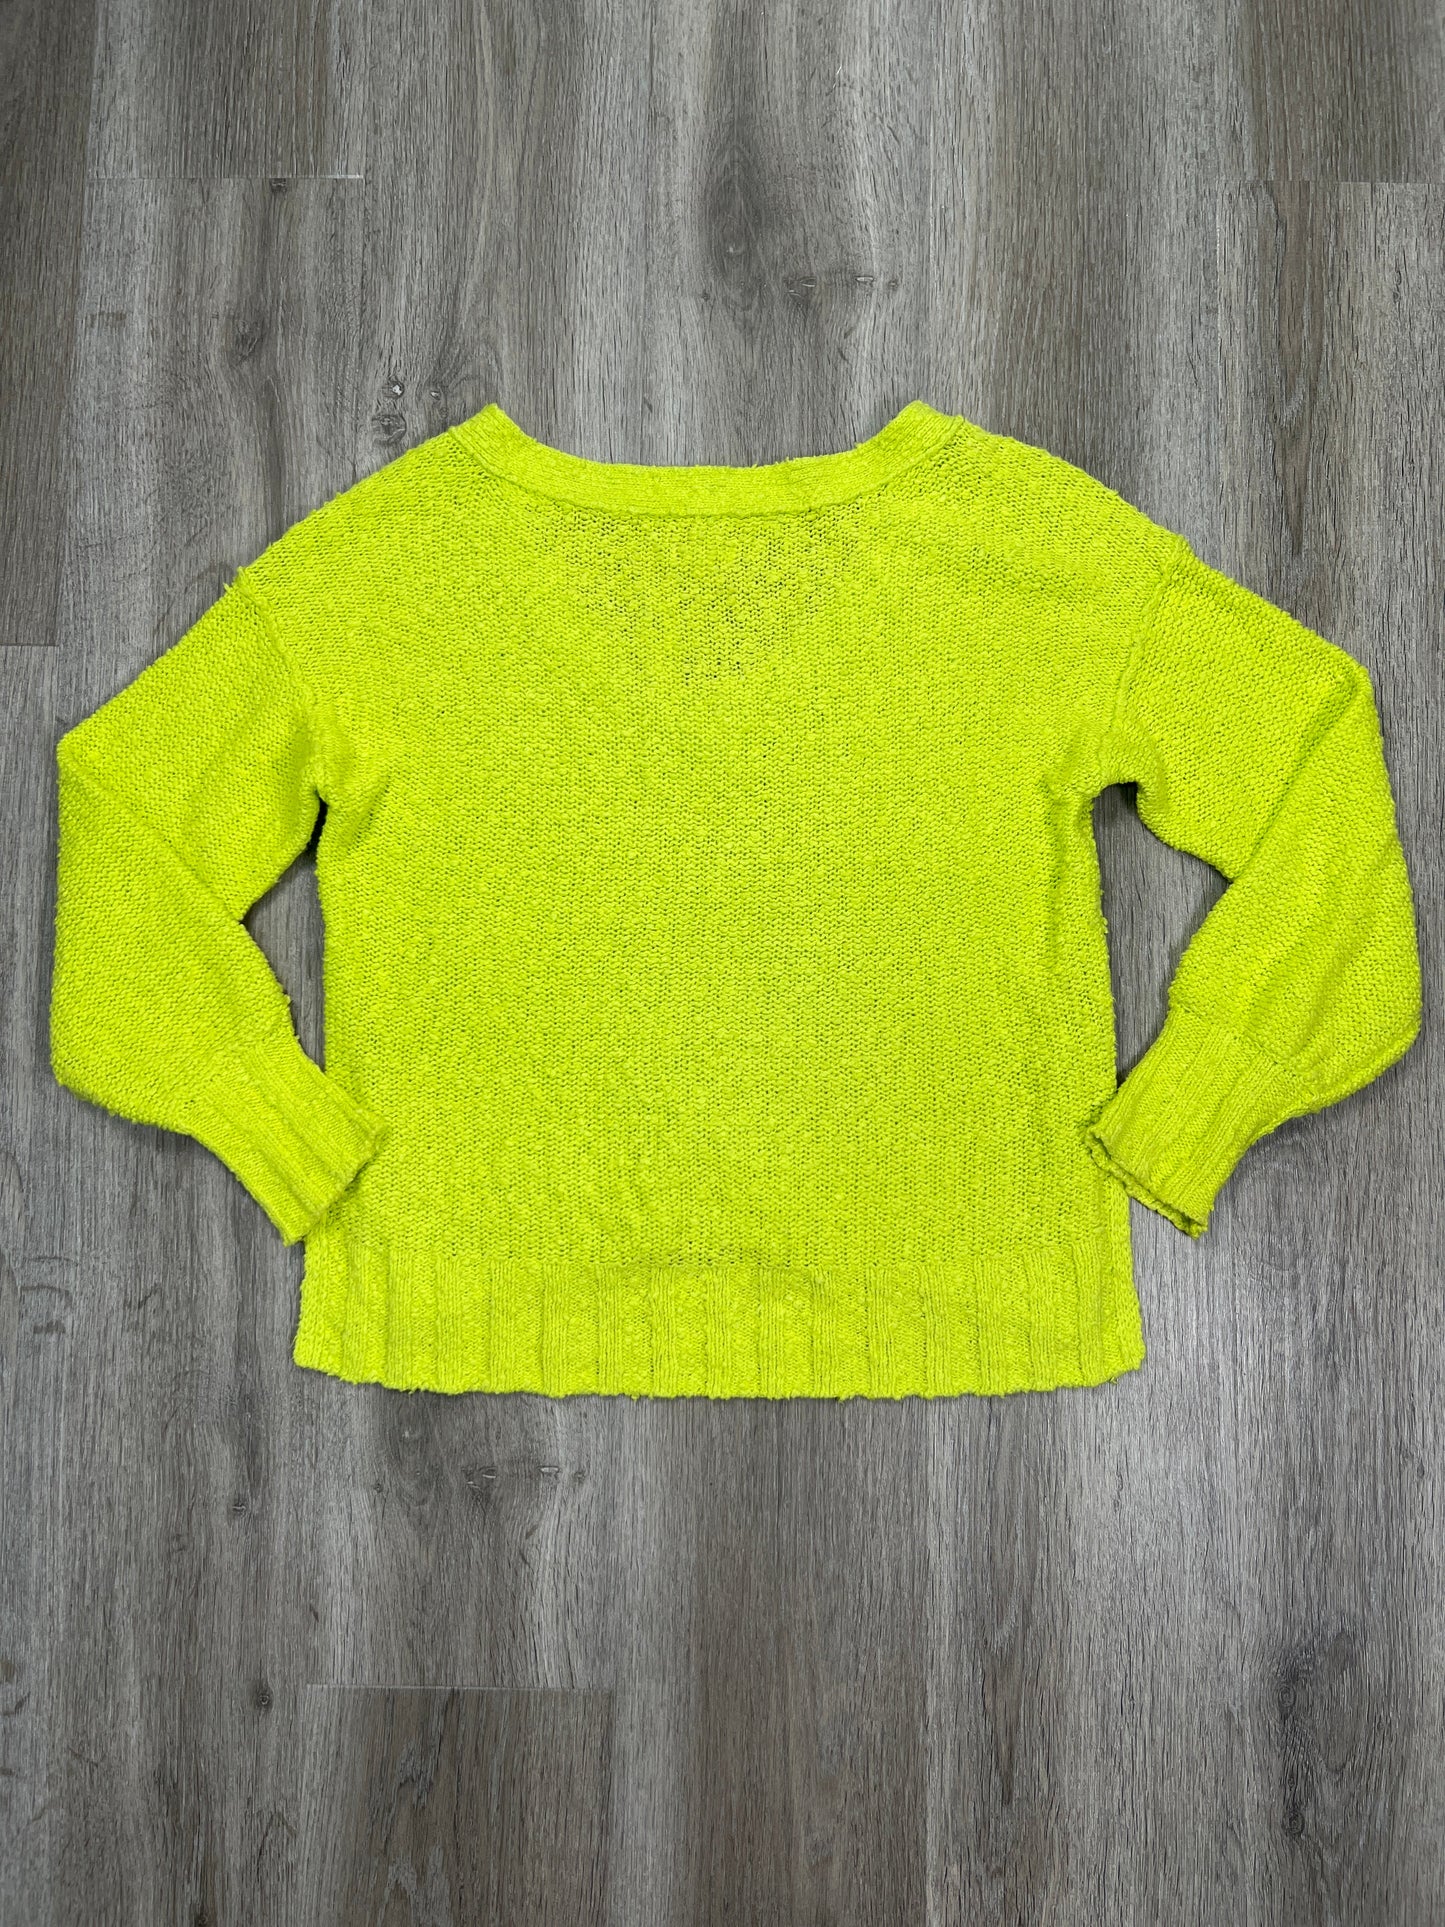 Green Sweater Pilcro, Size Xxs